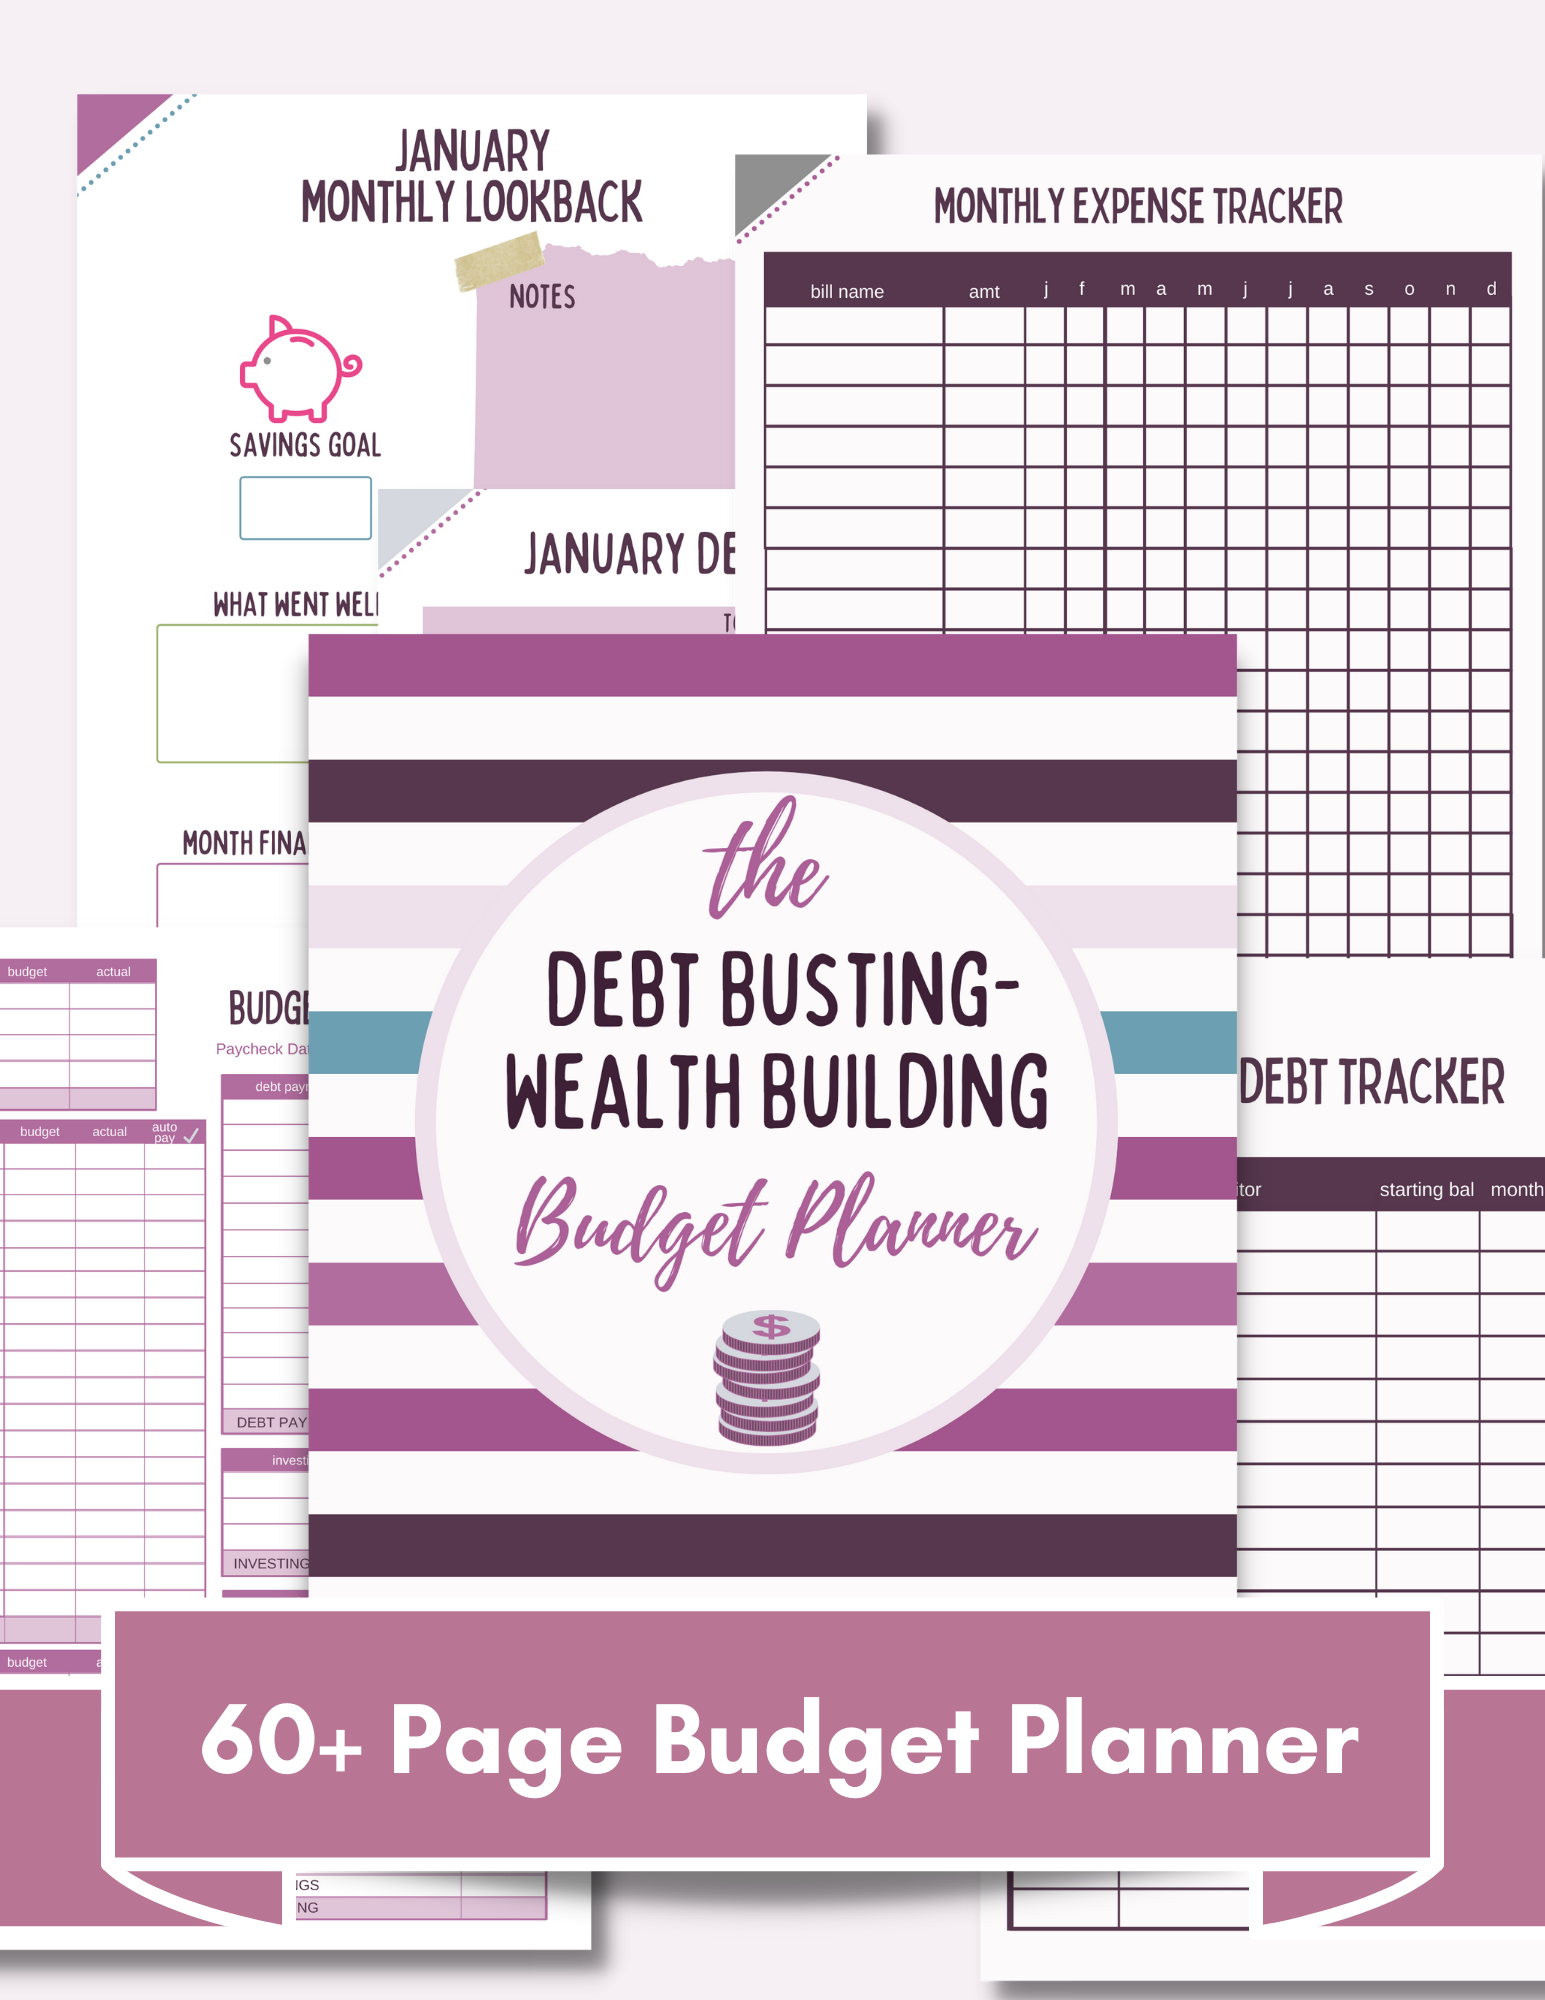 budget planner mockup: light purple and dark purple planner sheets on a light pink background